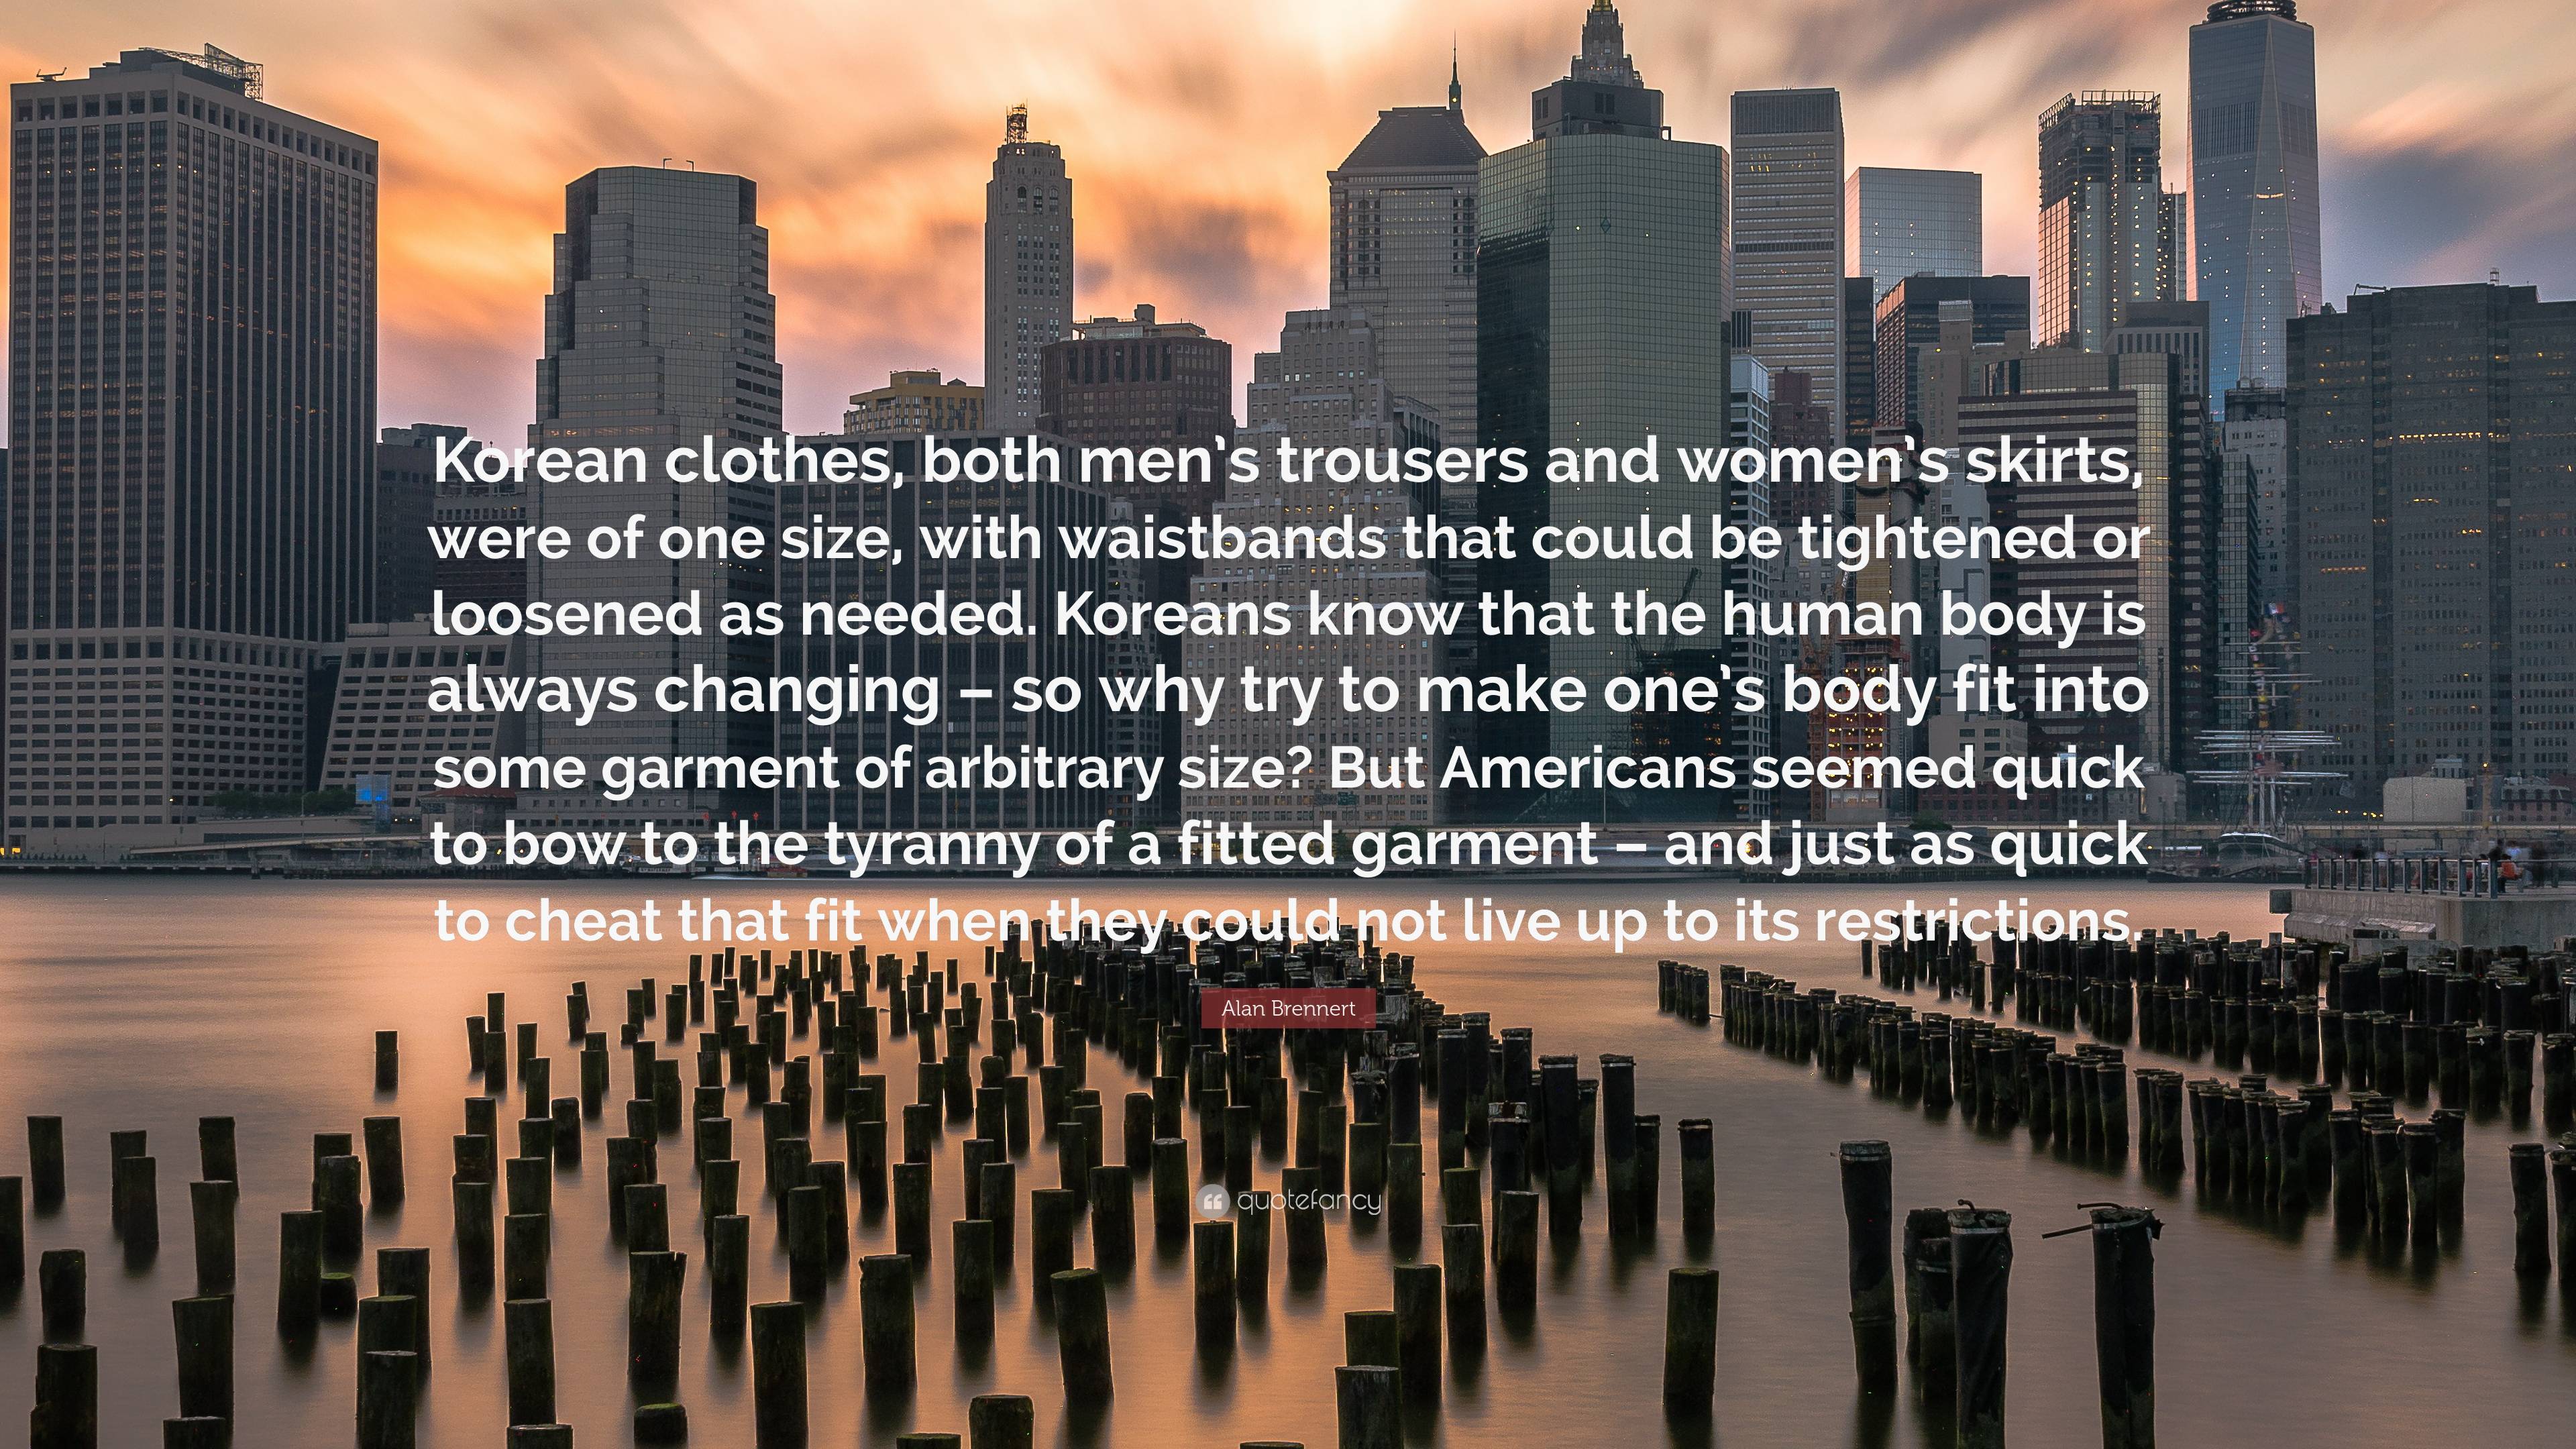 Bottoms for Men- Shop Joggers, Cargo Pants, Chino Pants & Trousers Online |  Powerlook